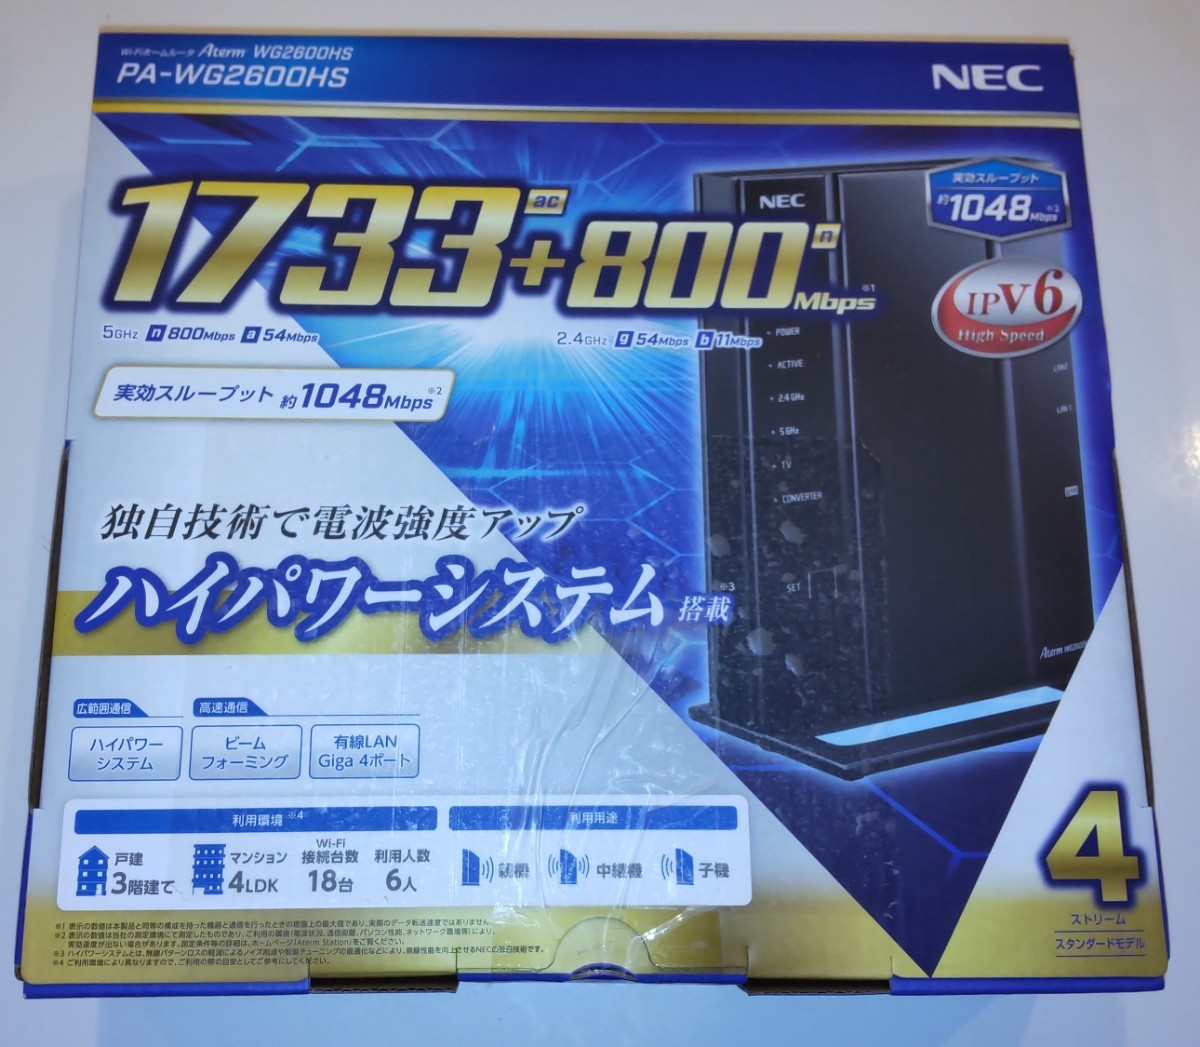 NEC PA-WG2600HS  無線LANルーター  Wi-Fiルーター  Aterm  Wi-Fi  無線LAN